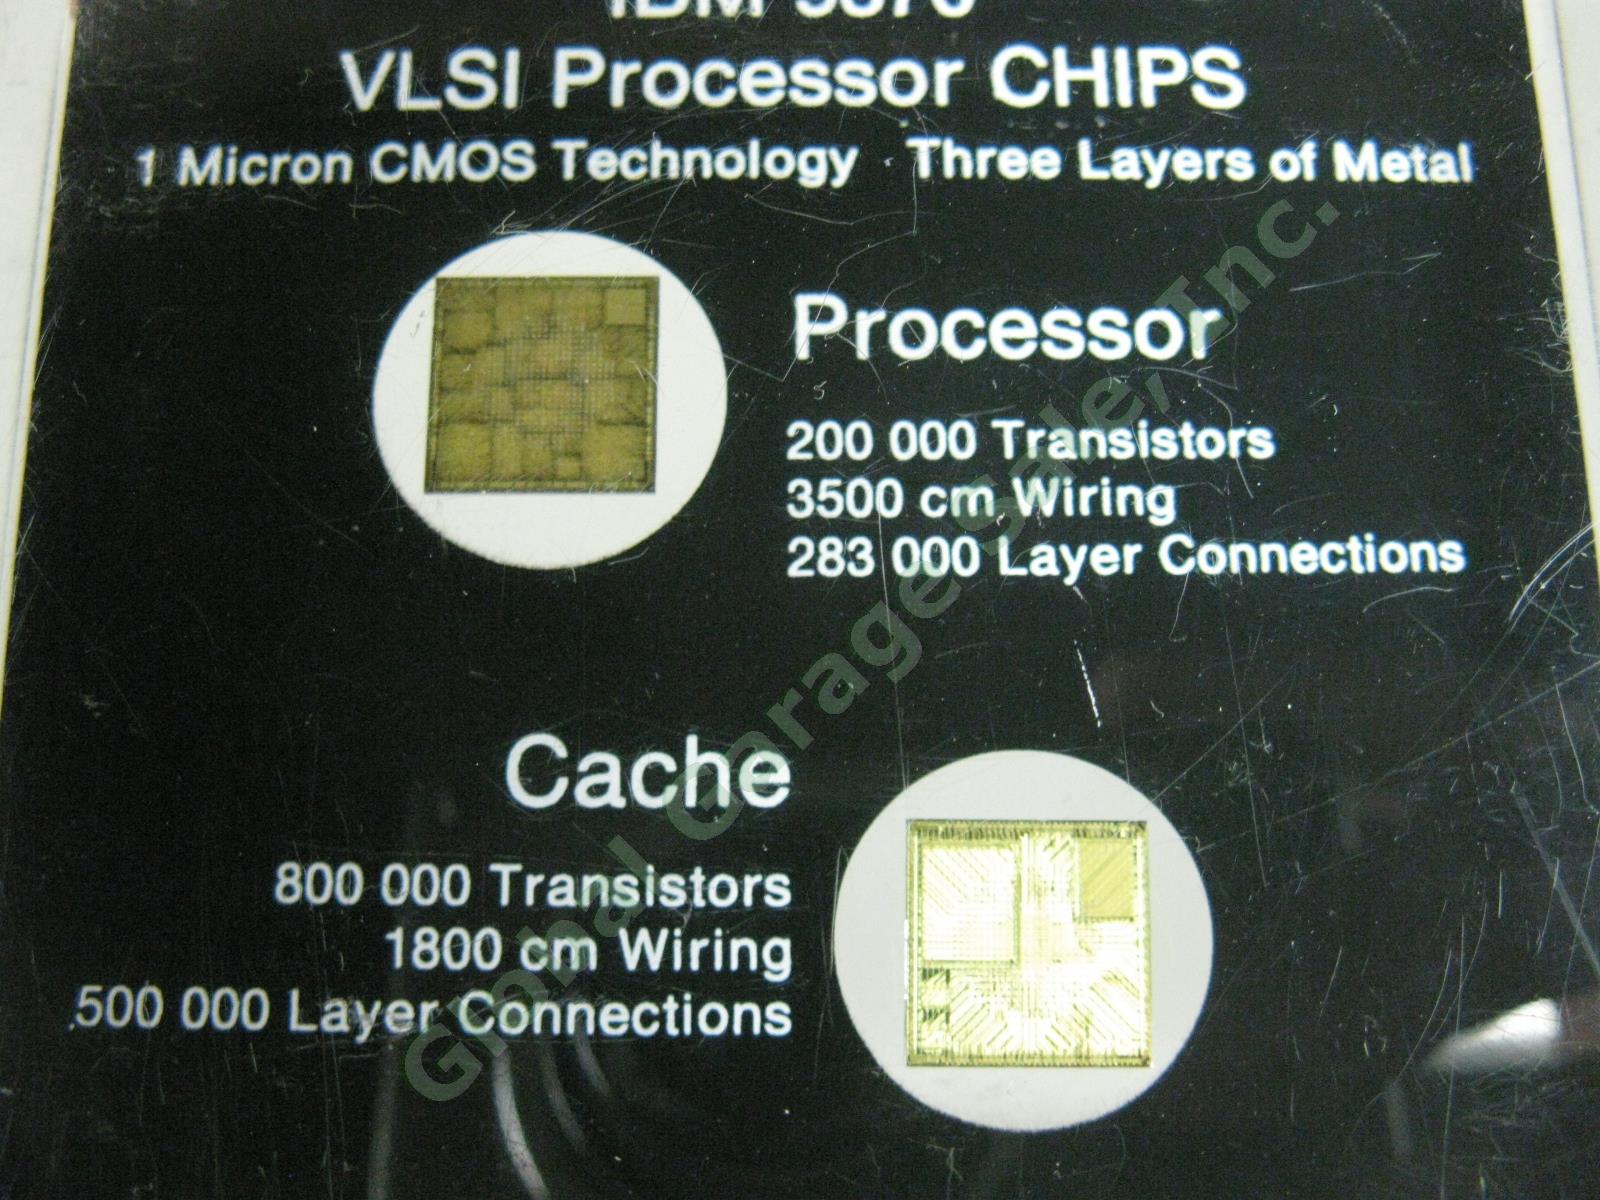 Vintage IBM Lucite Embedded Computer Chip PAPERWEIGHT 9370 VLSI Processor Cache 1